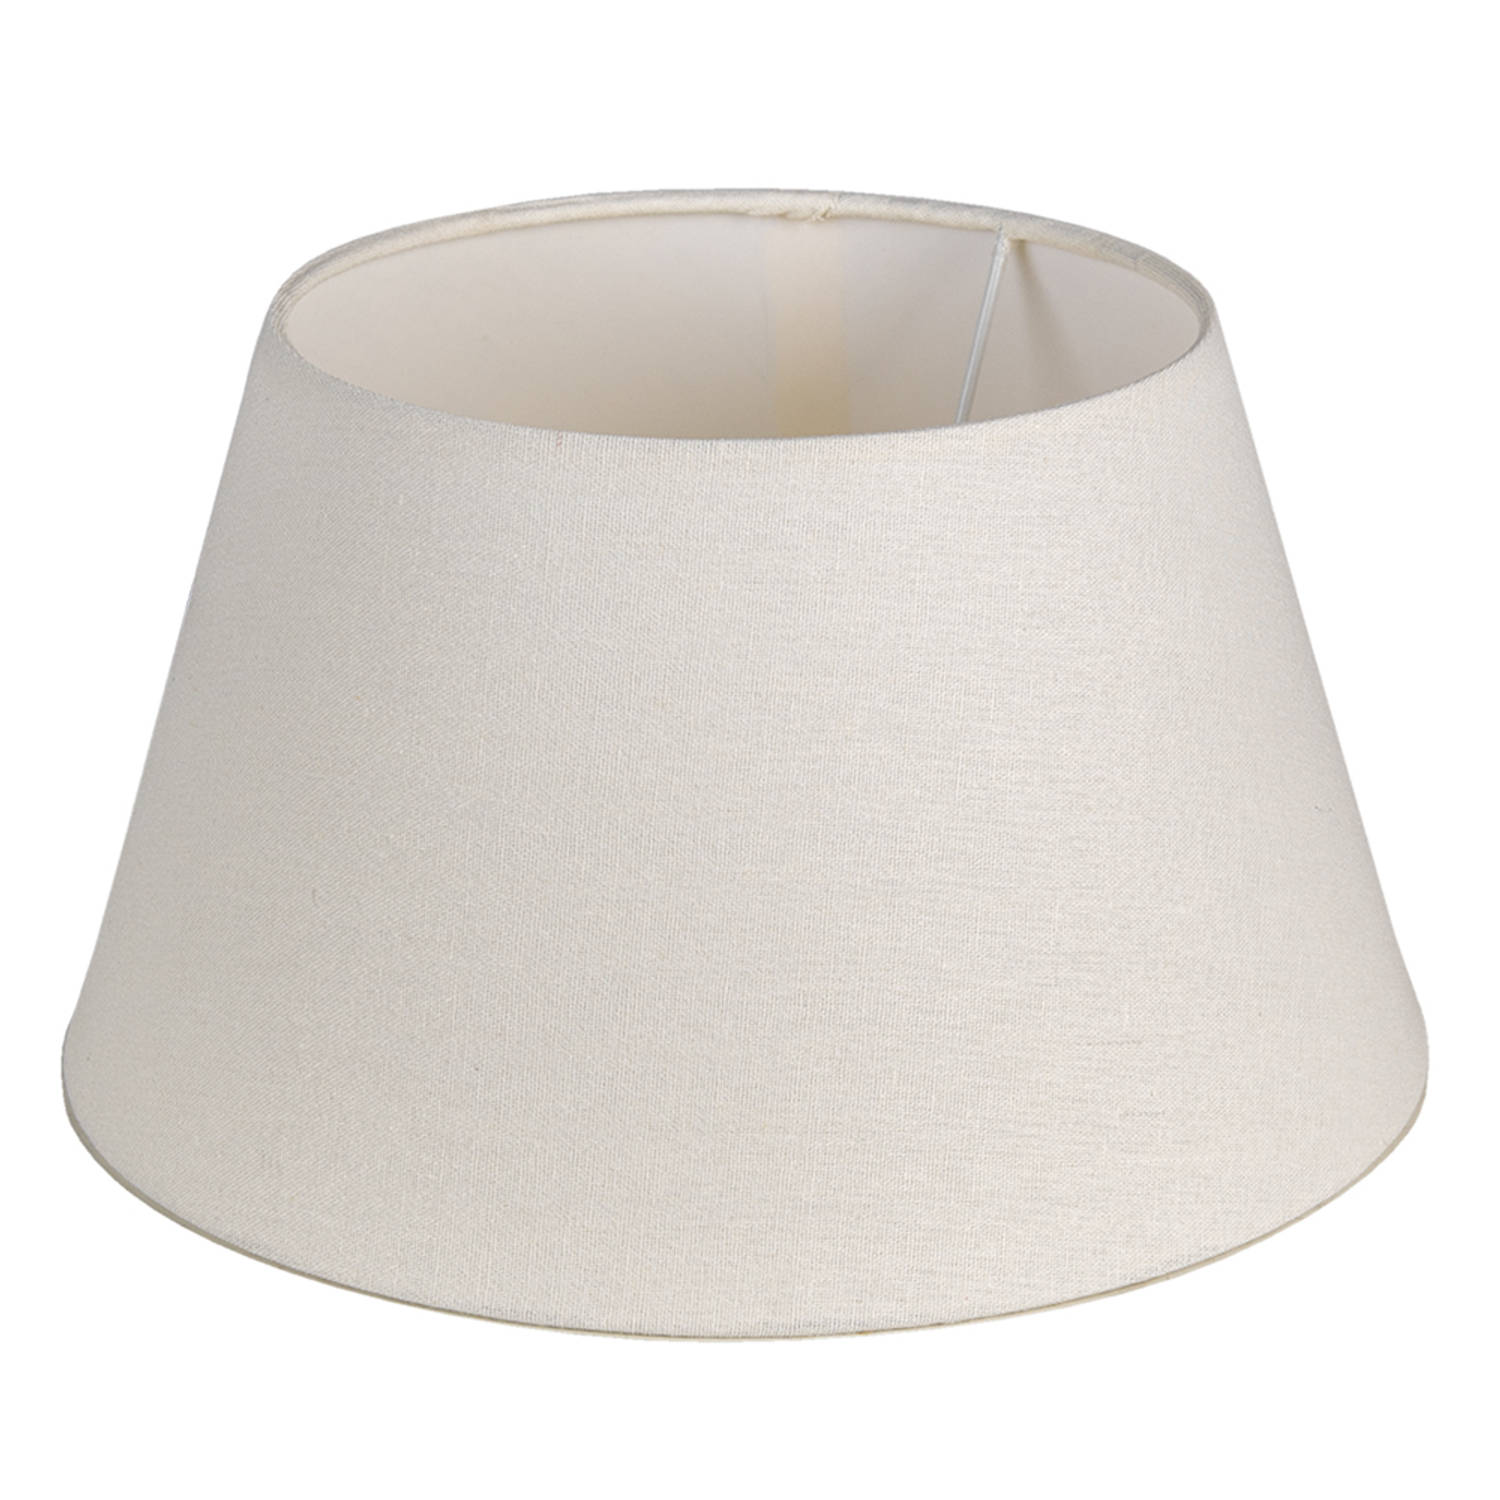 HAES DECO - Lampenkap - Natural Cosy - wit rond - formaat Ø 30x17 cm, voor Fitting E27 - Tafellamp, Hanglamp